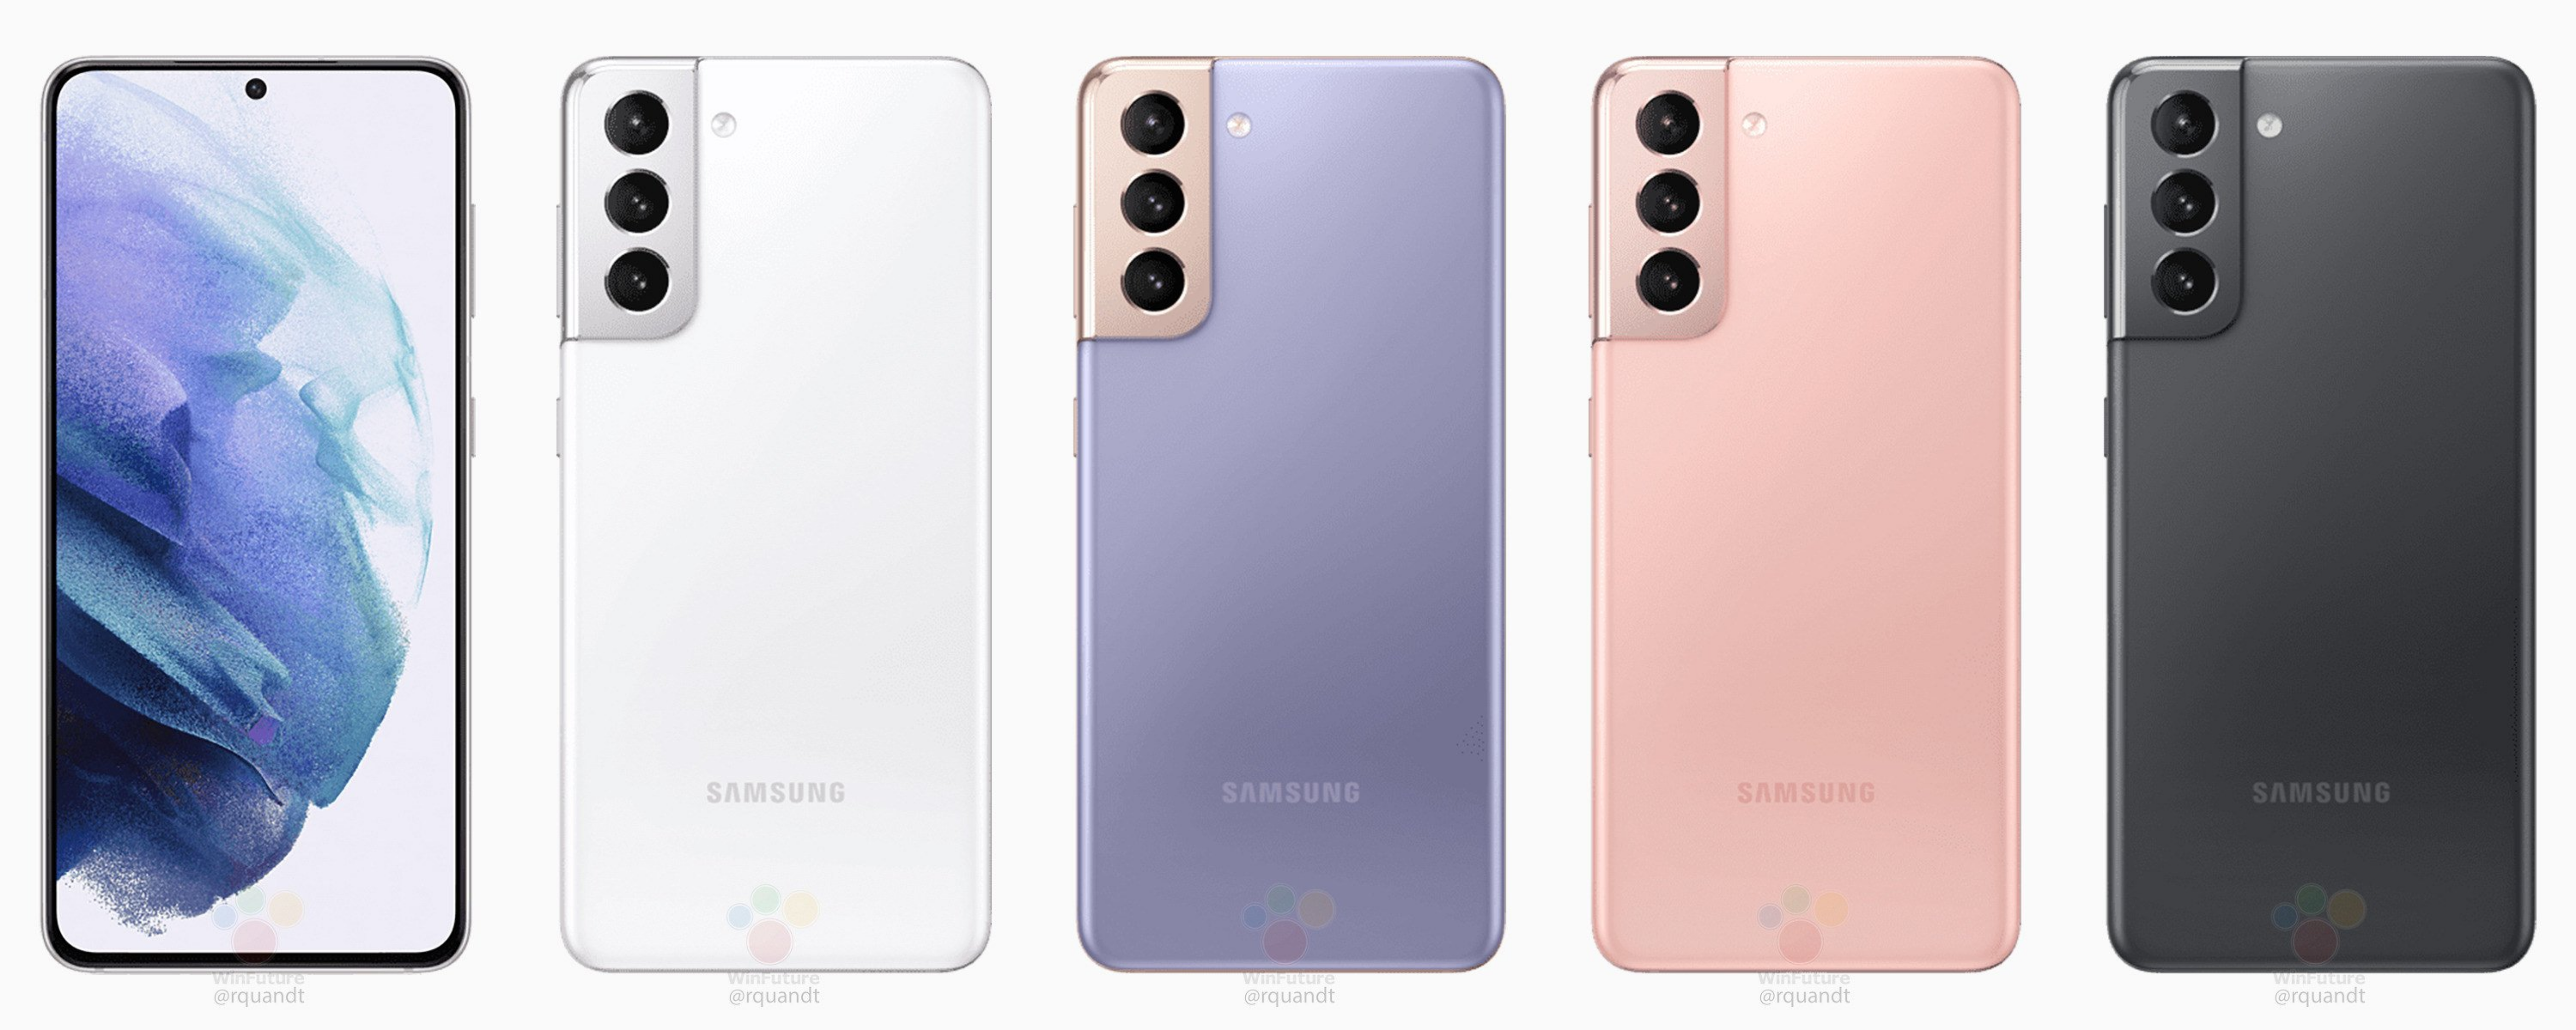 O s 21. Samsung Galaxy s21 5g. Самсунг s21 Ultra. Самсунг s215g. Samsung Galaxy s21 Plus.